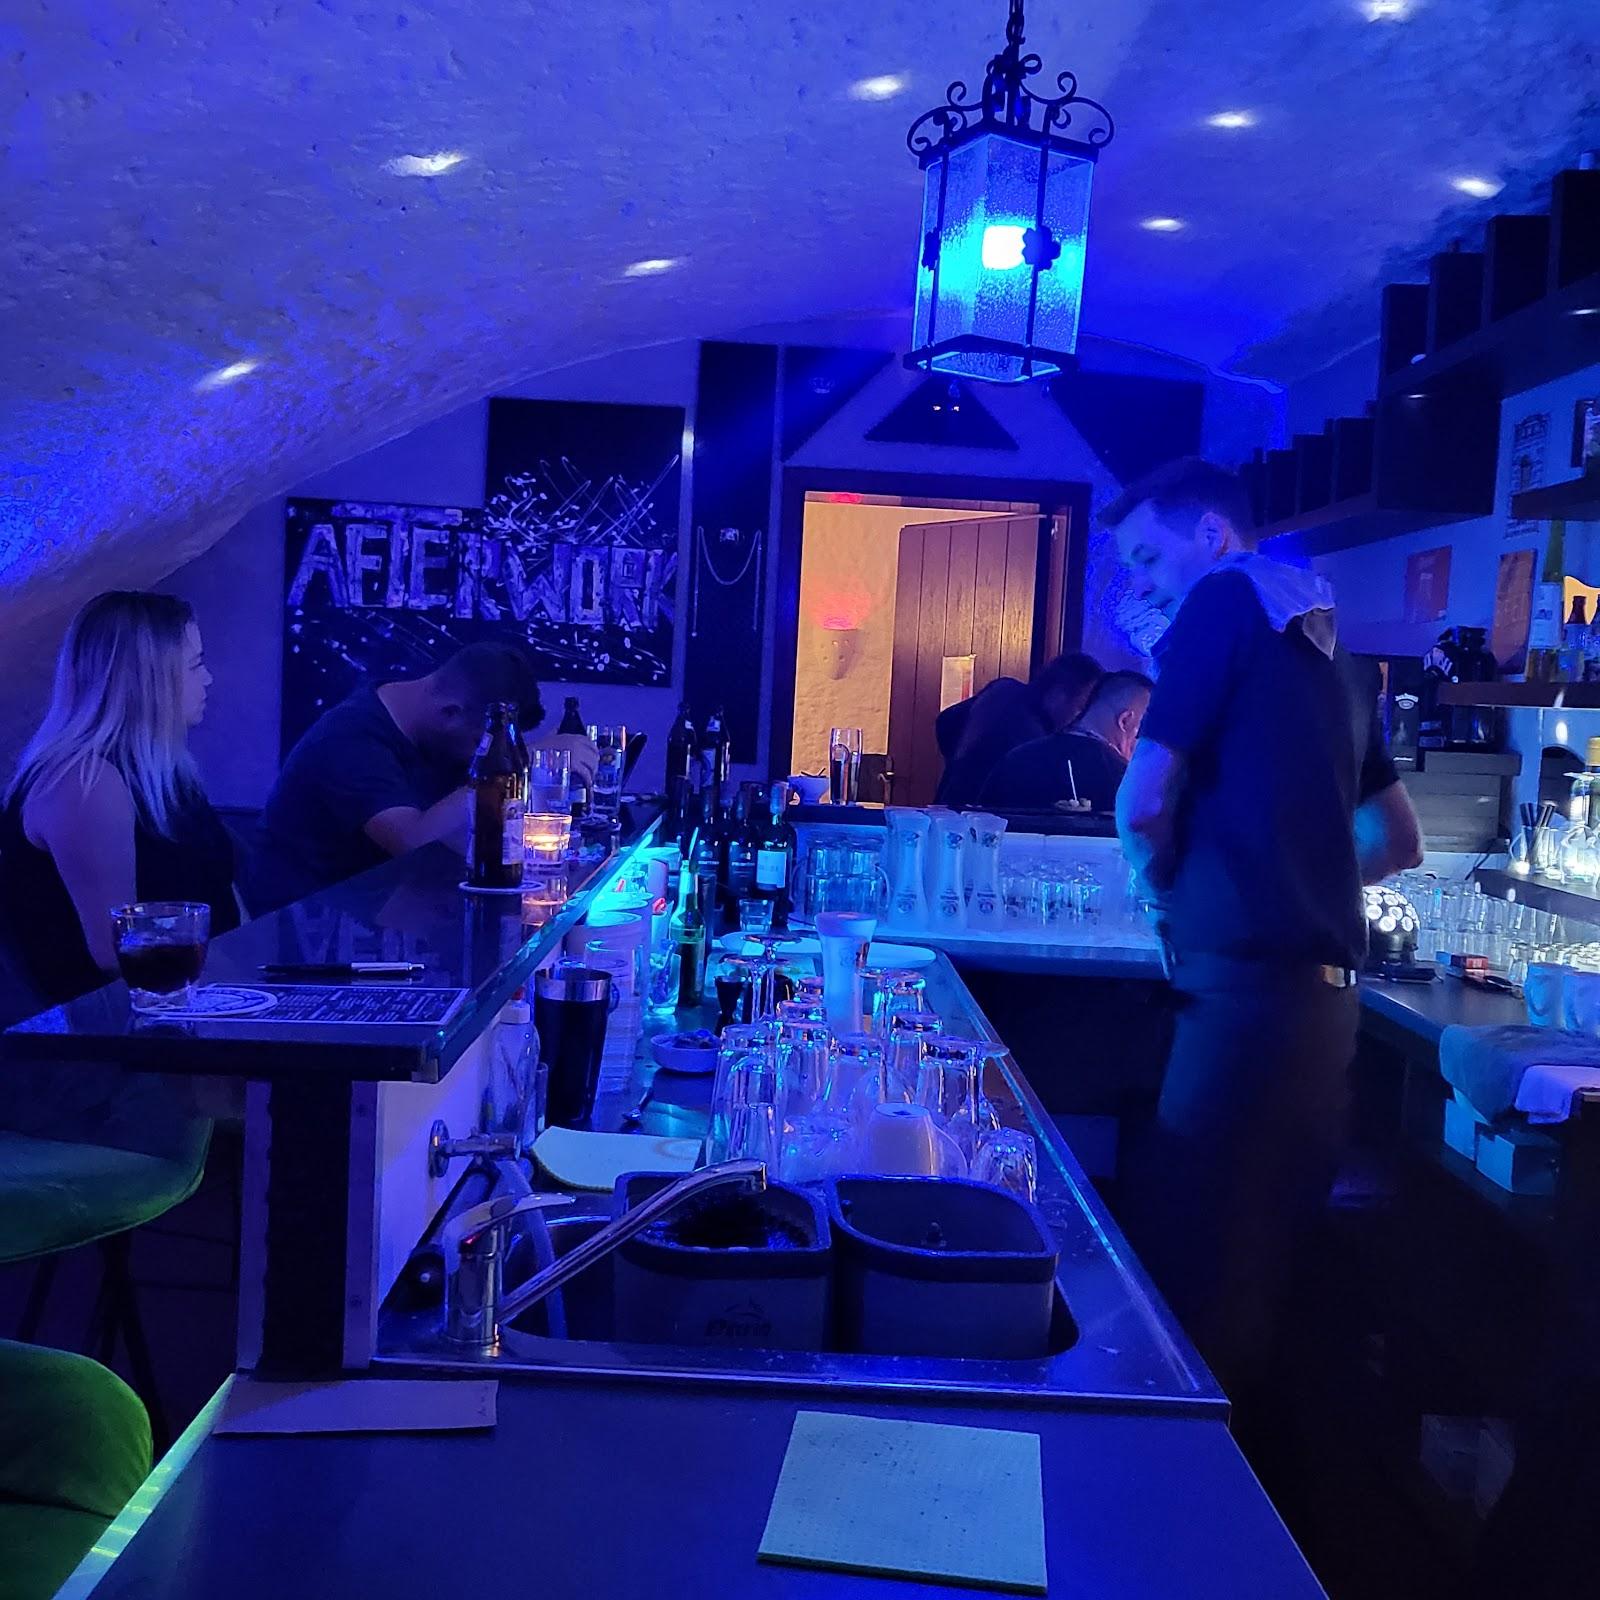 Restaurant "Afterwork Bar" in Haßfurt